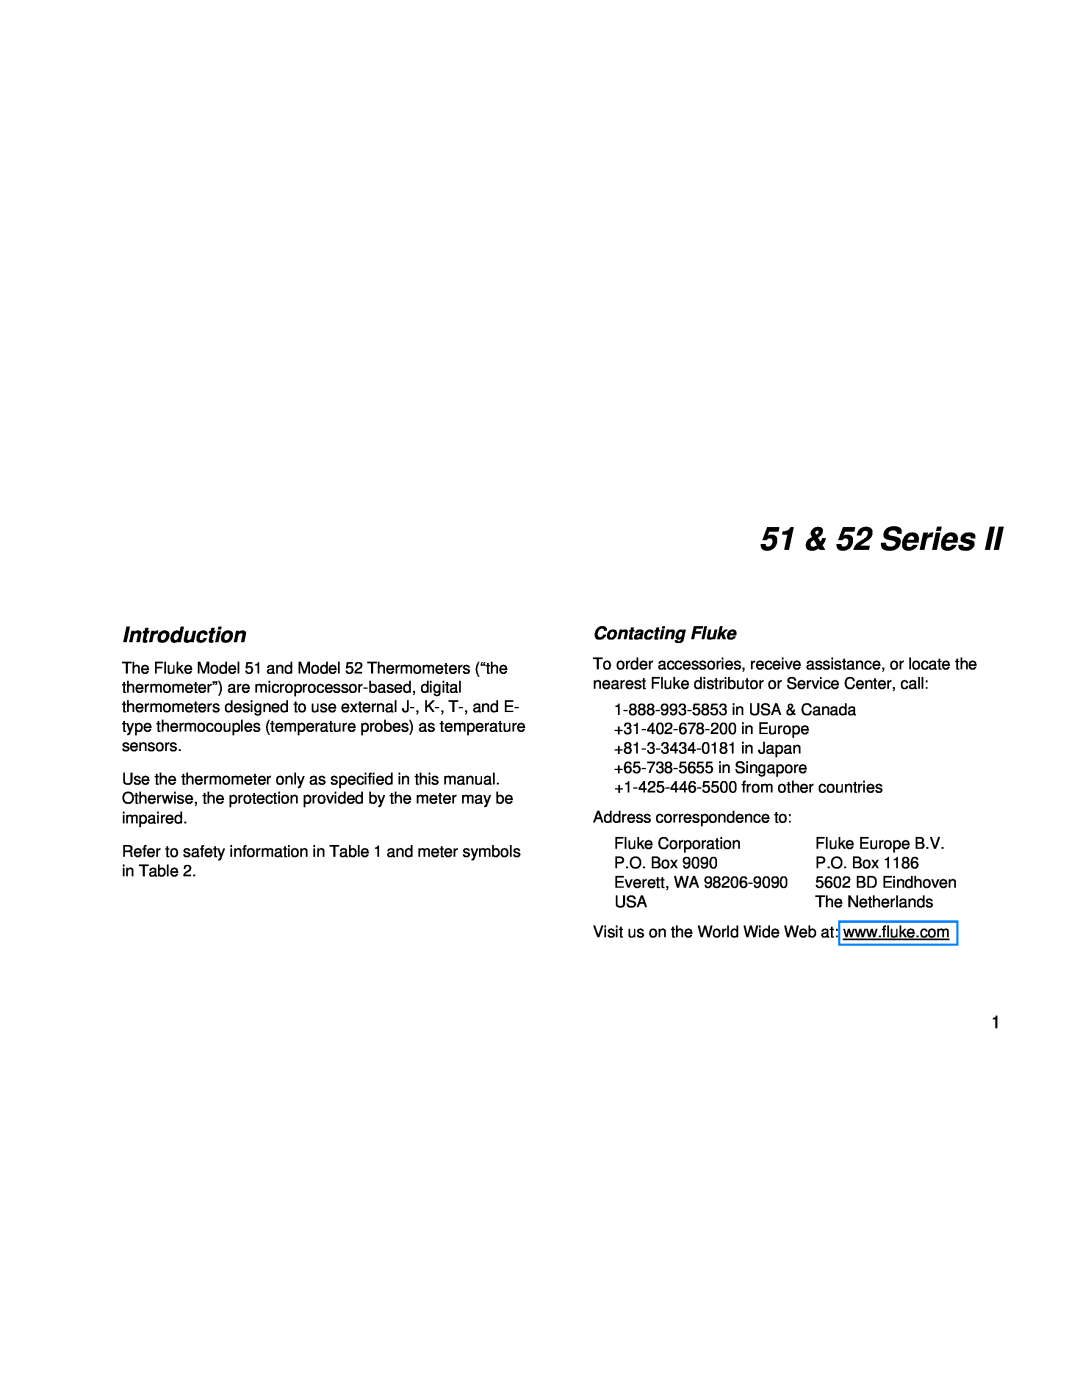 Fluke 51 & 52 Series II user manual Introduction, Contacting Fluke 